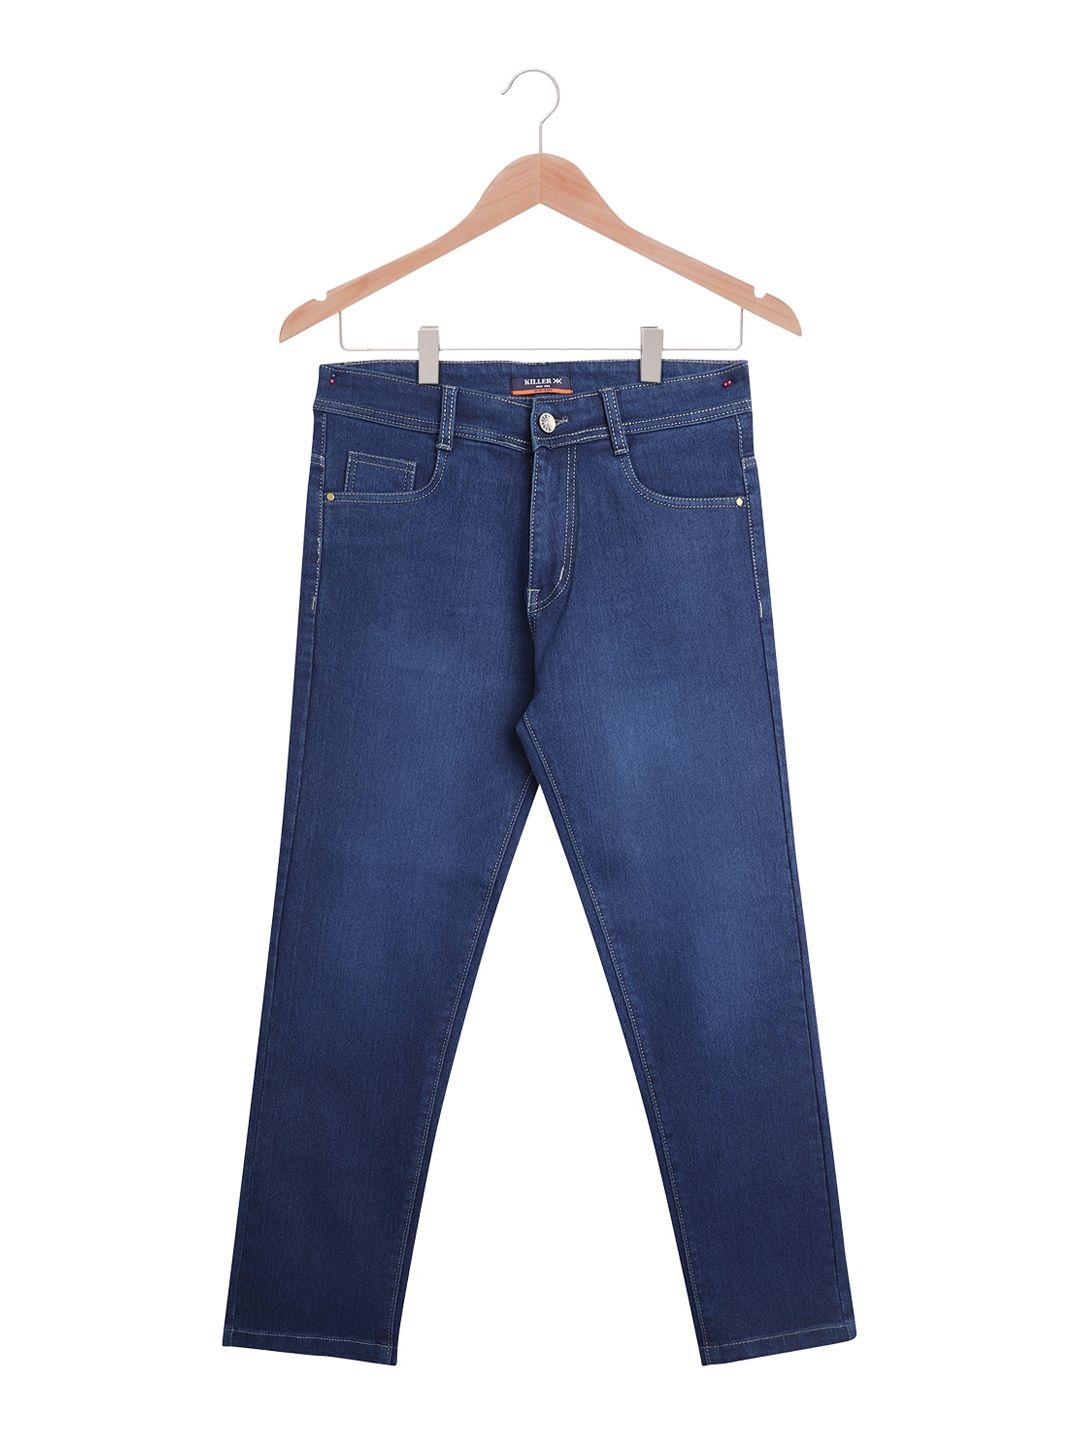 killer-boys-blue-light-fade-mid-rise-cotton-jeans